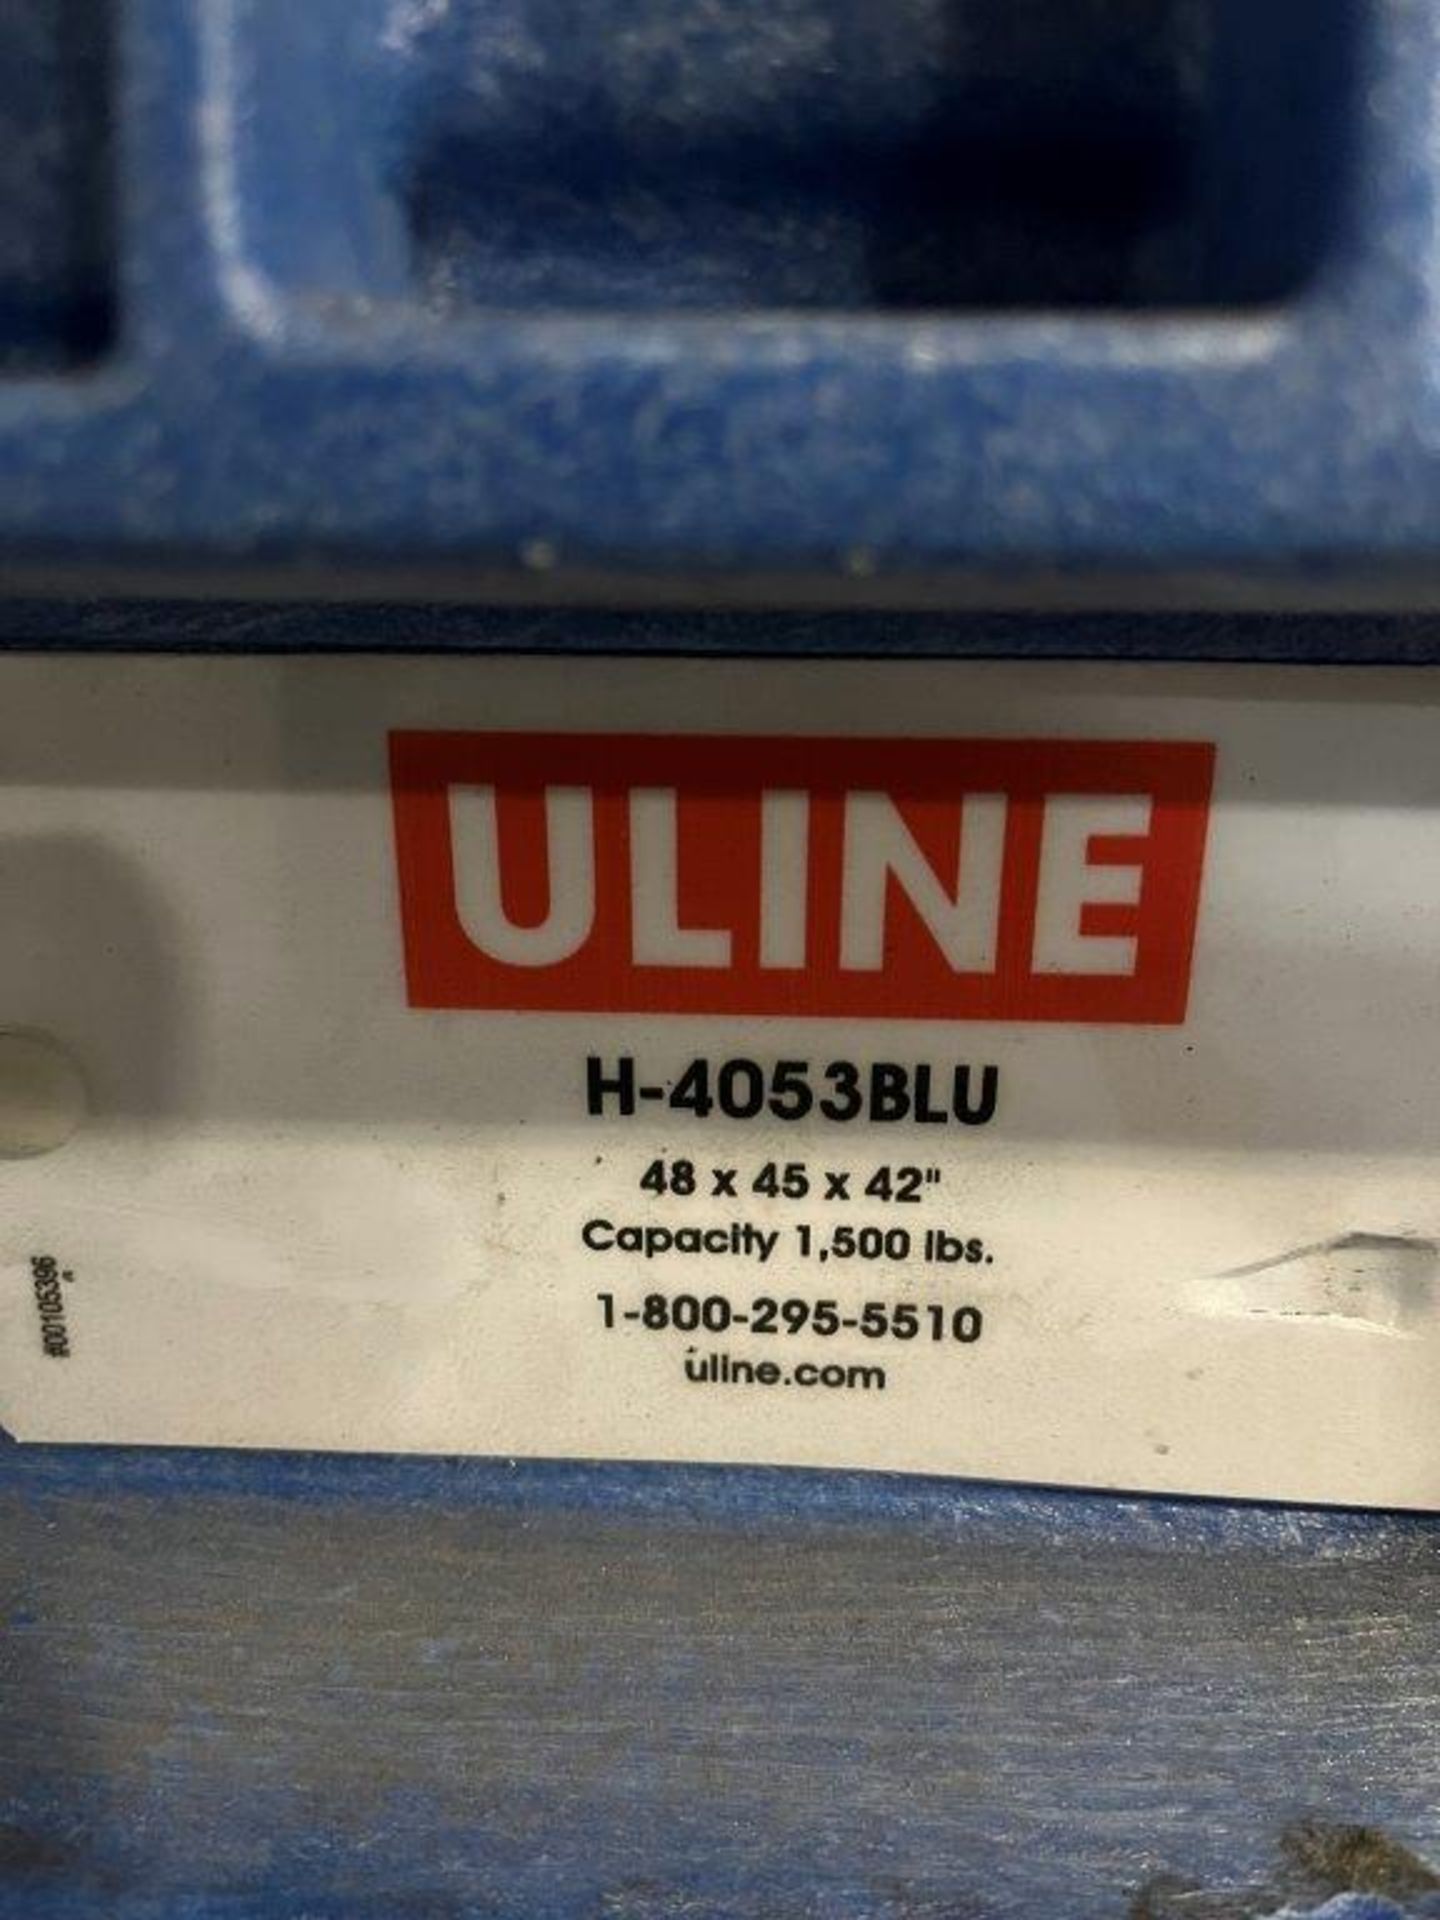 (12) Uline H-4053BLU 48" x 45" x 42" Collapsible Plastic Bins, 1,500-Lb Capacity - Image 2 of 2